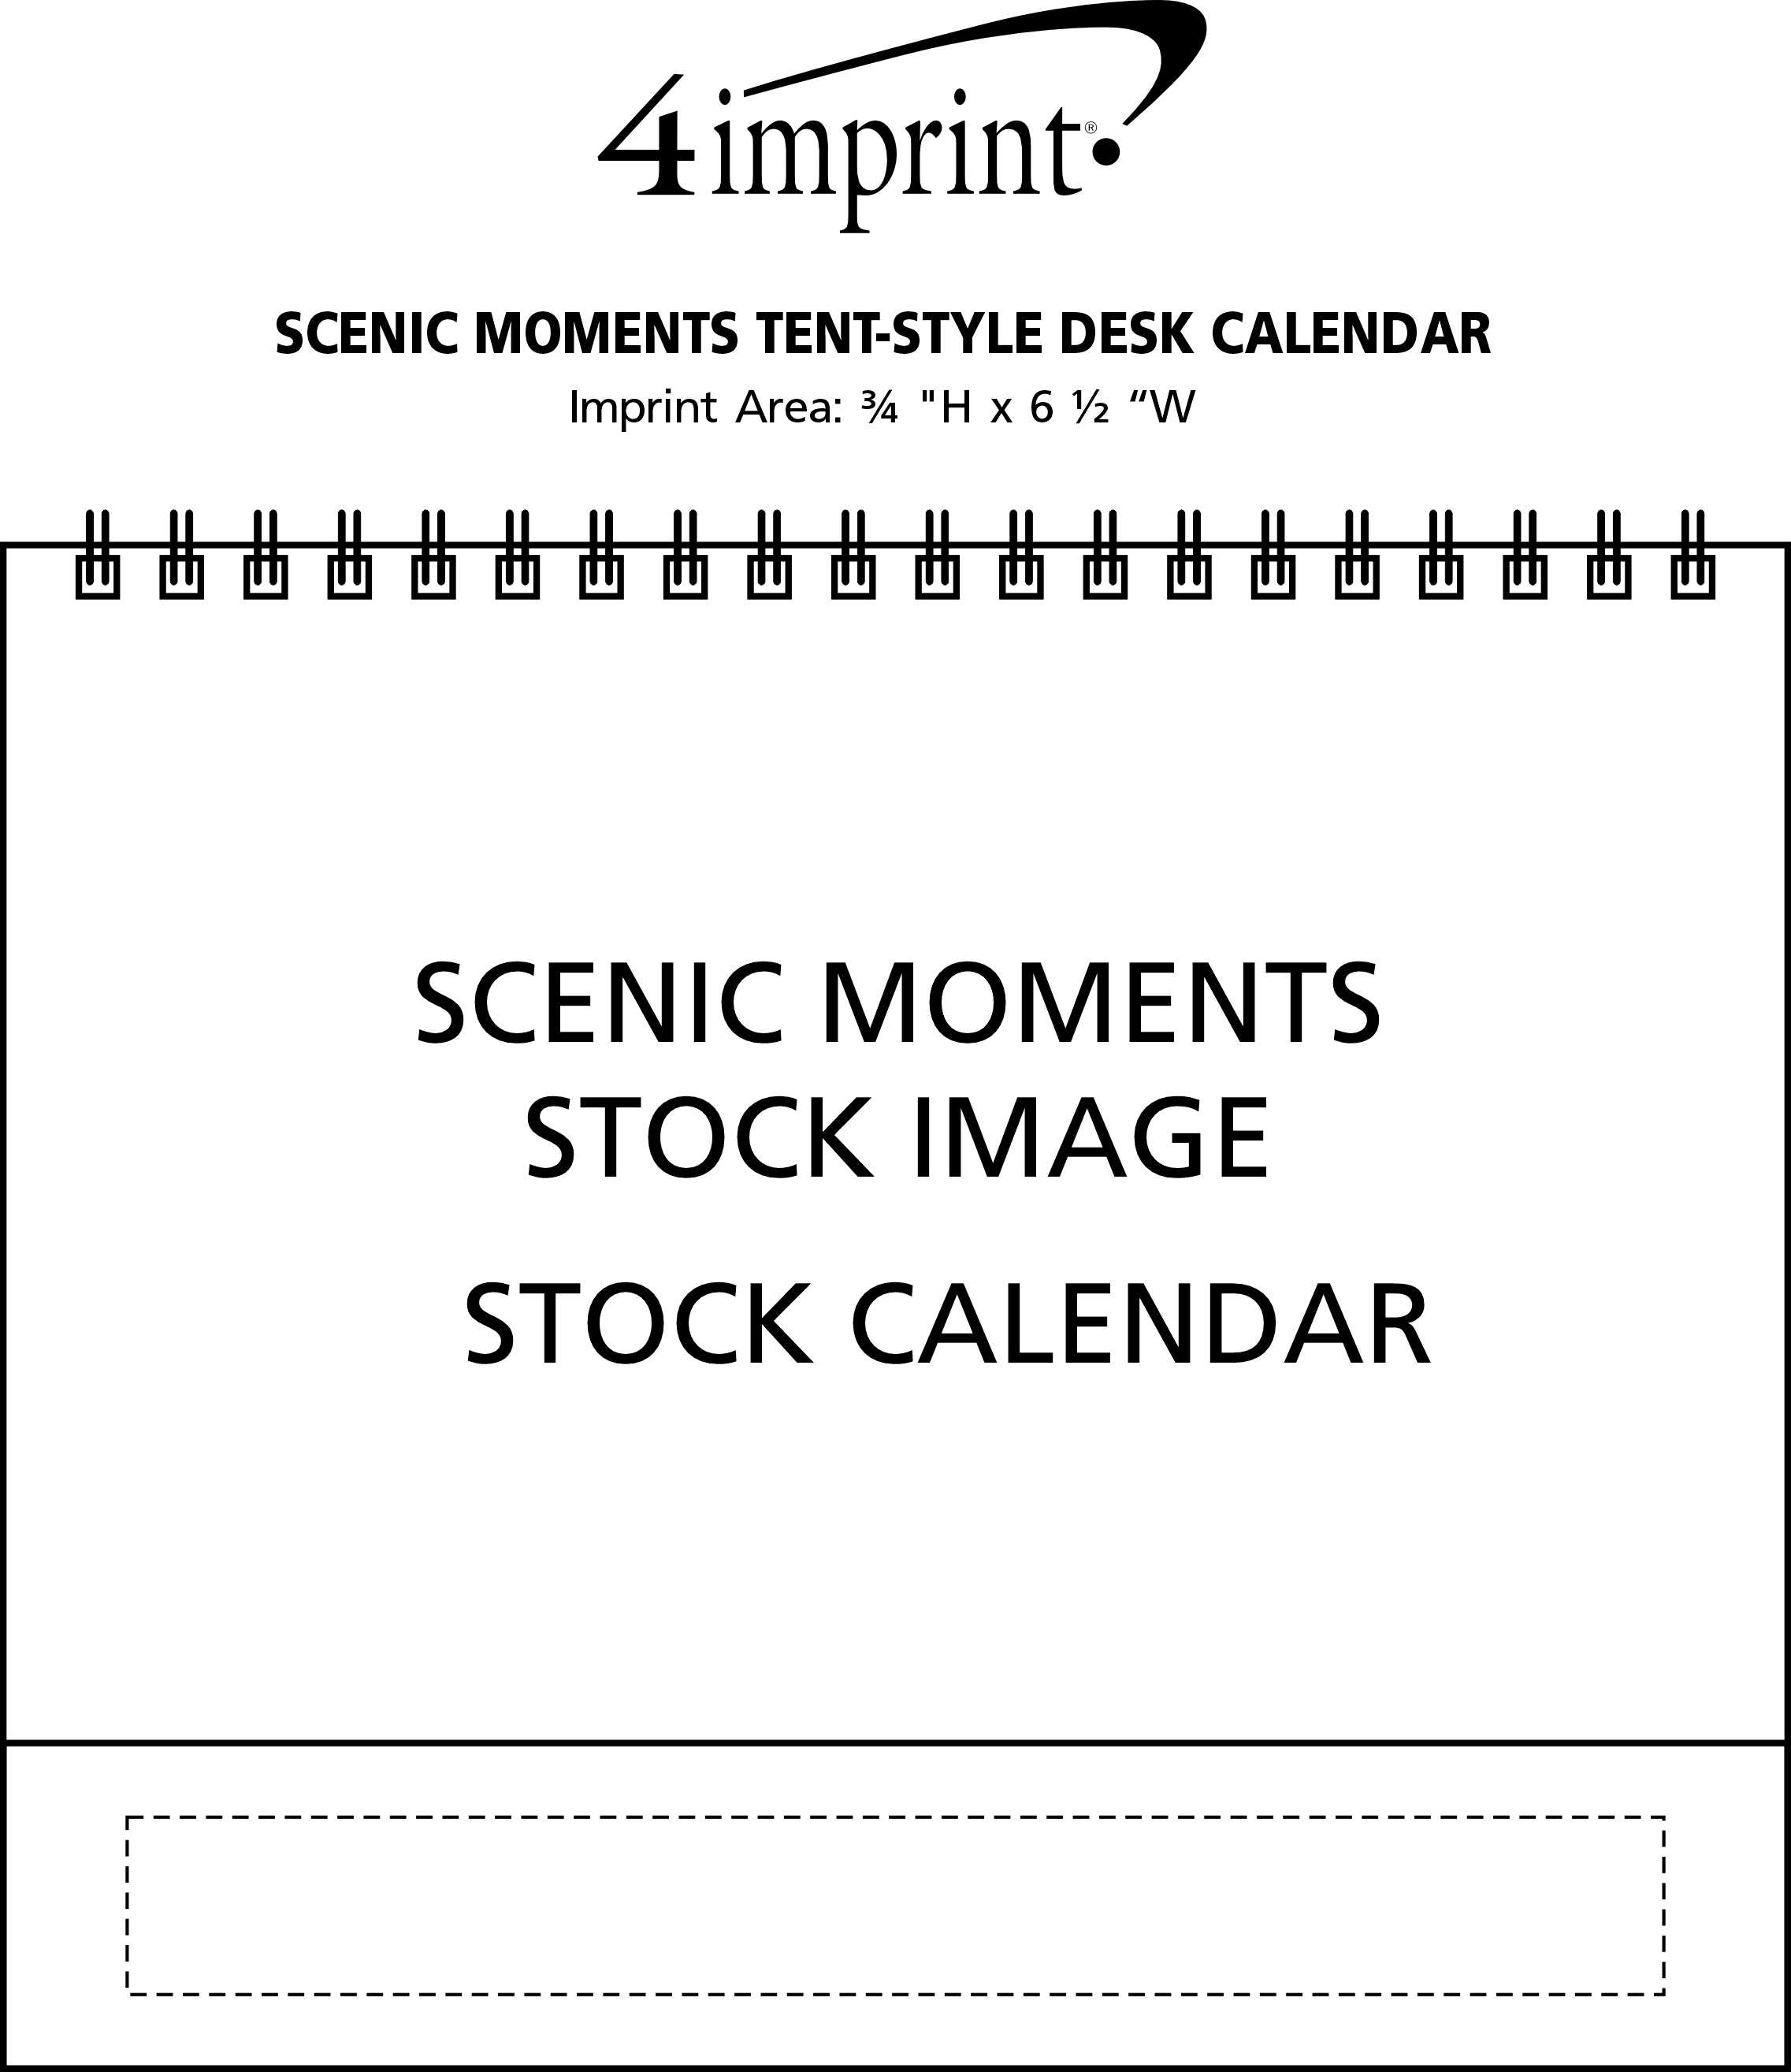 Imprint Area of Scenic Moments Tent-Style Desk Calendar